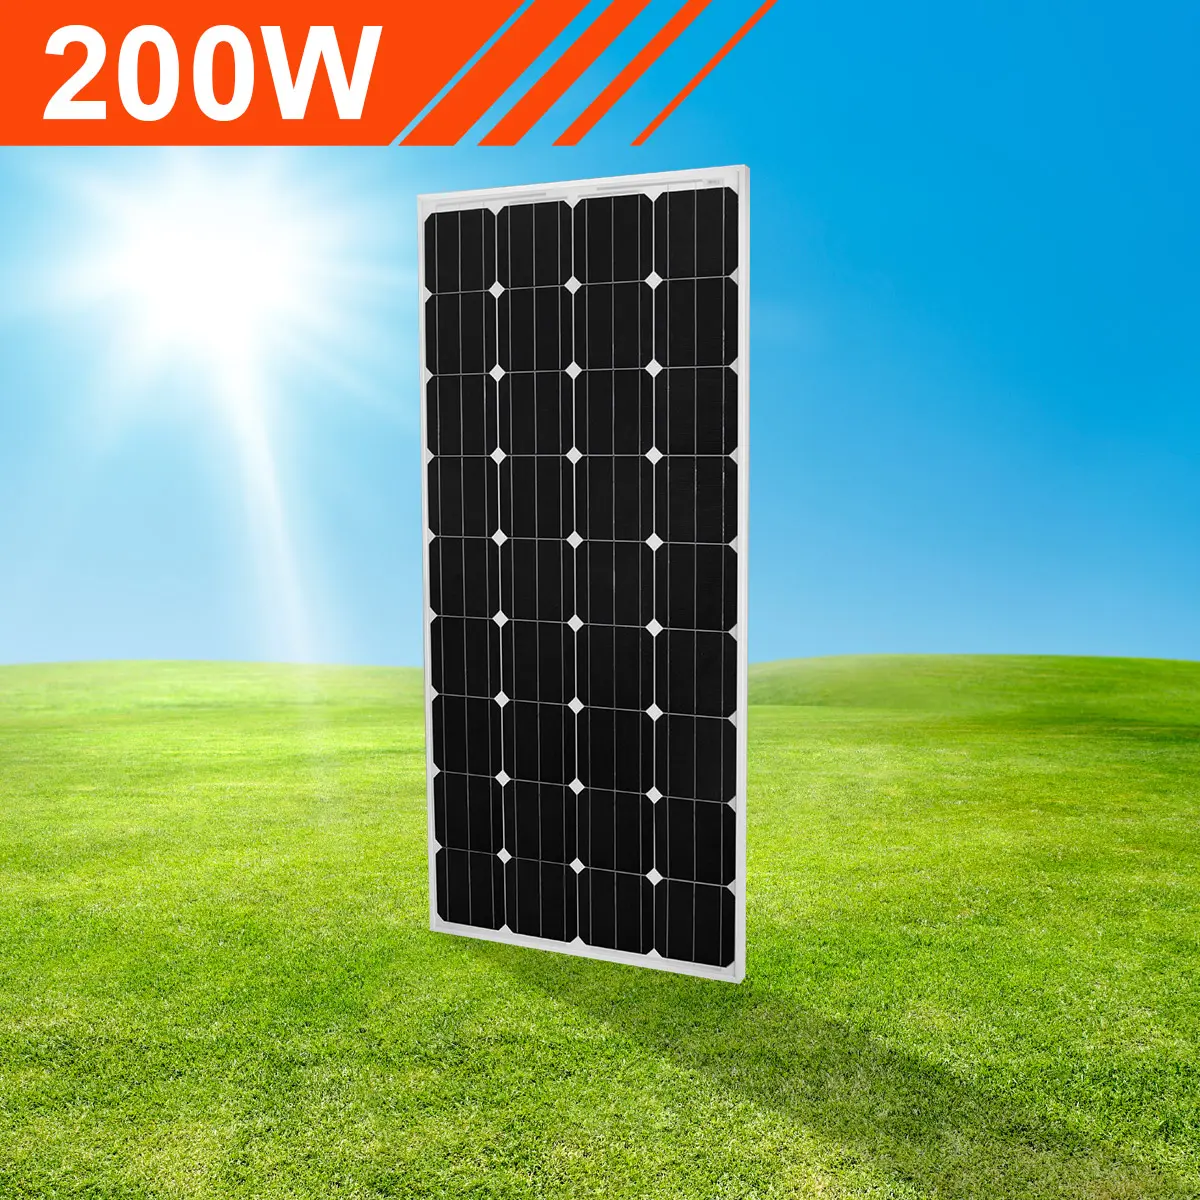 200 watt portable solar panel - What size should a 200W solar panel be